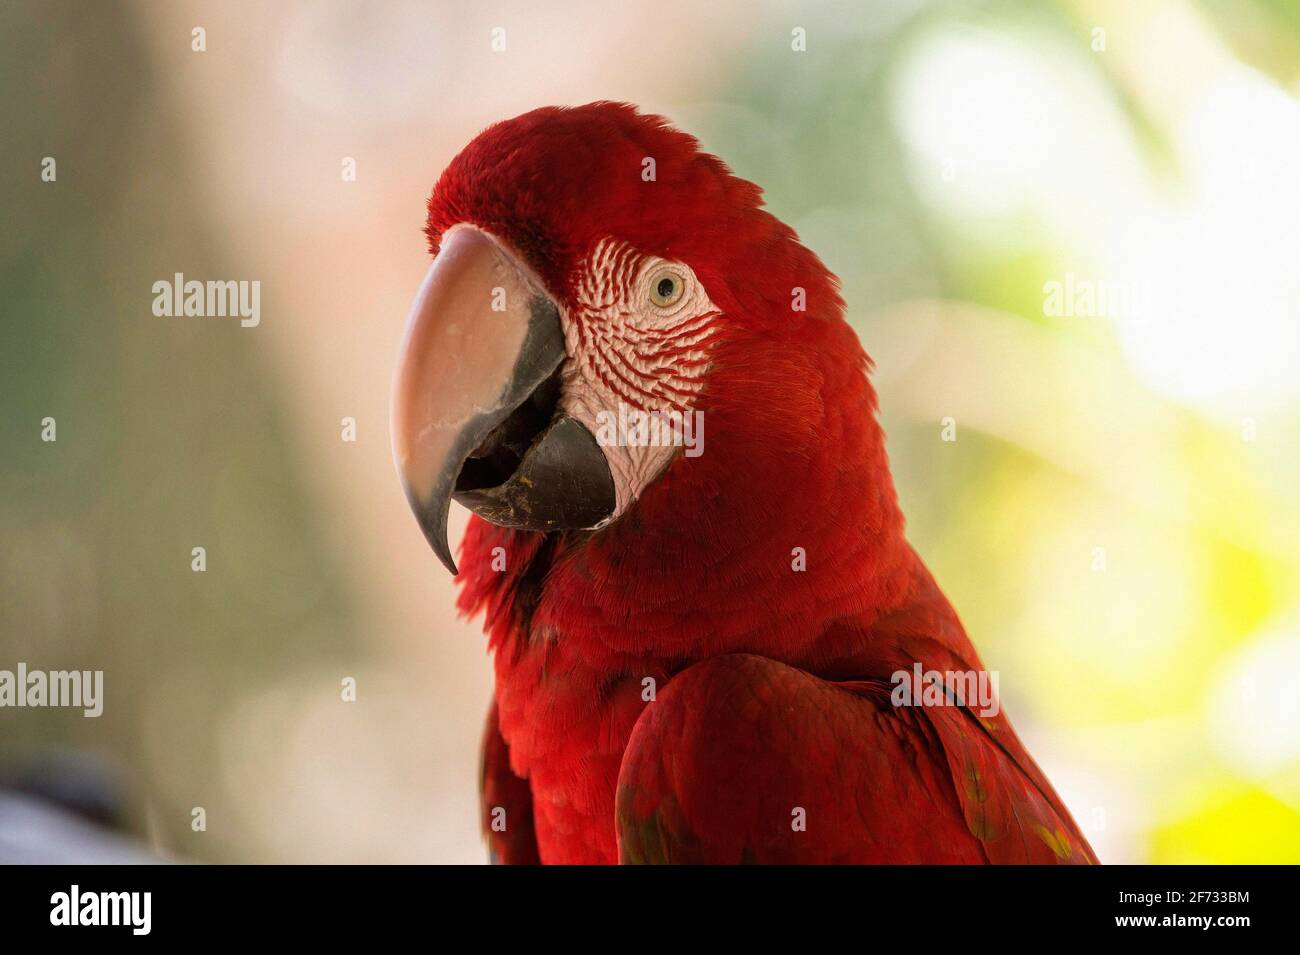 Red-and-green macaw (Ara chloroptera), portrait, Mato Grosso du Sul, Brazil Stock Photo